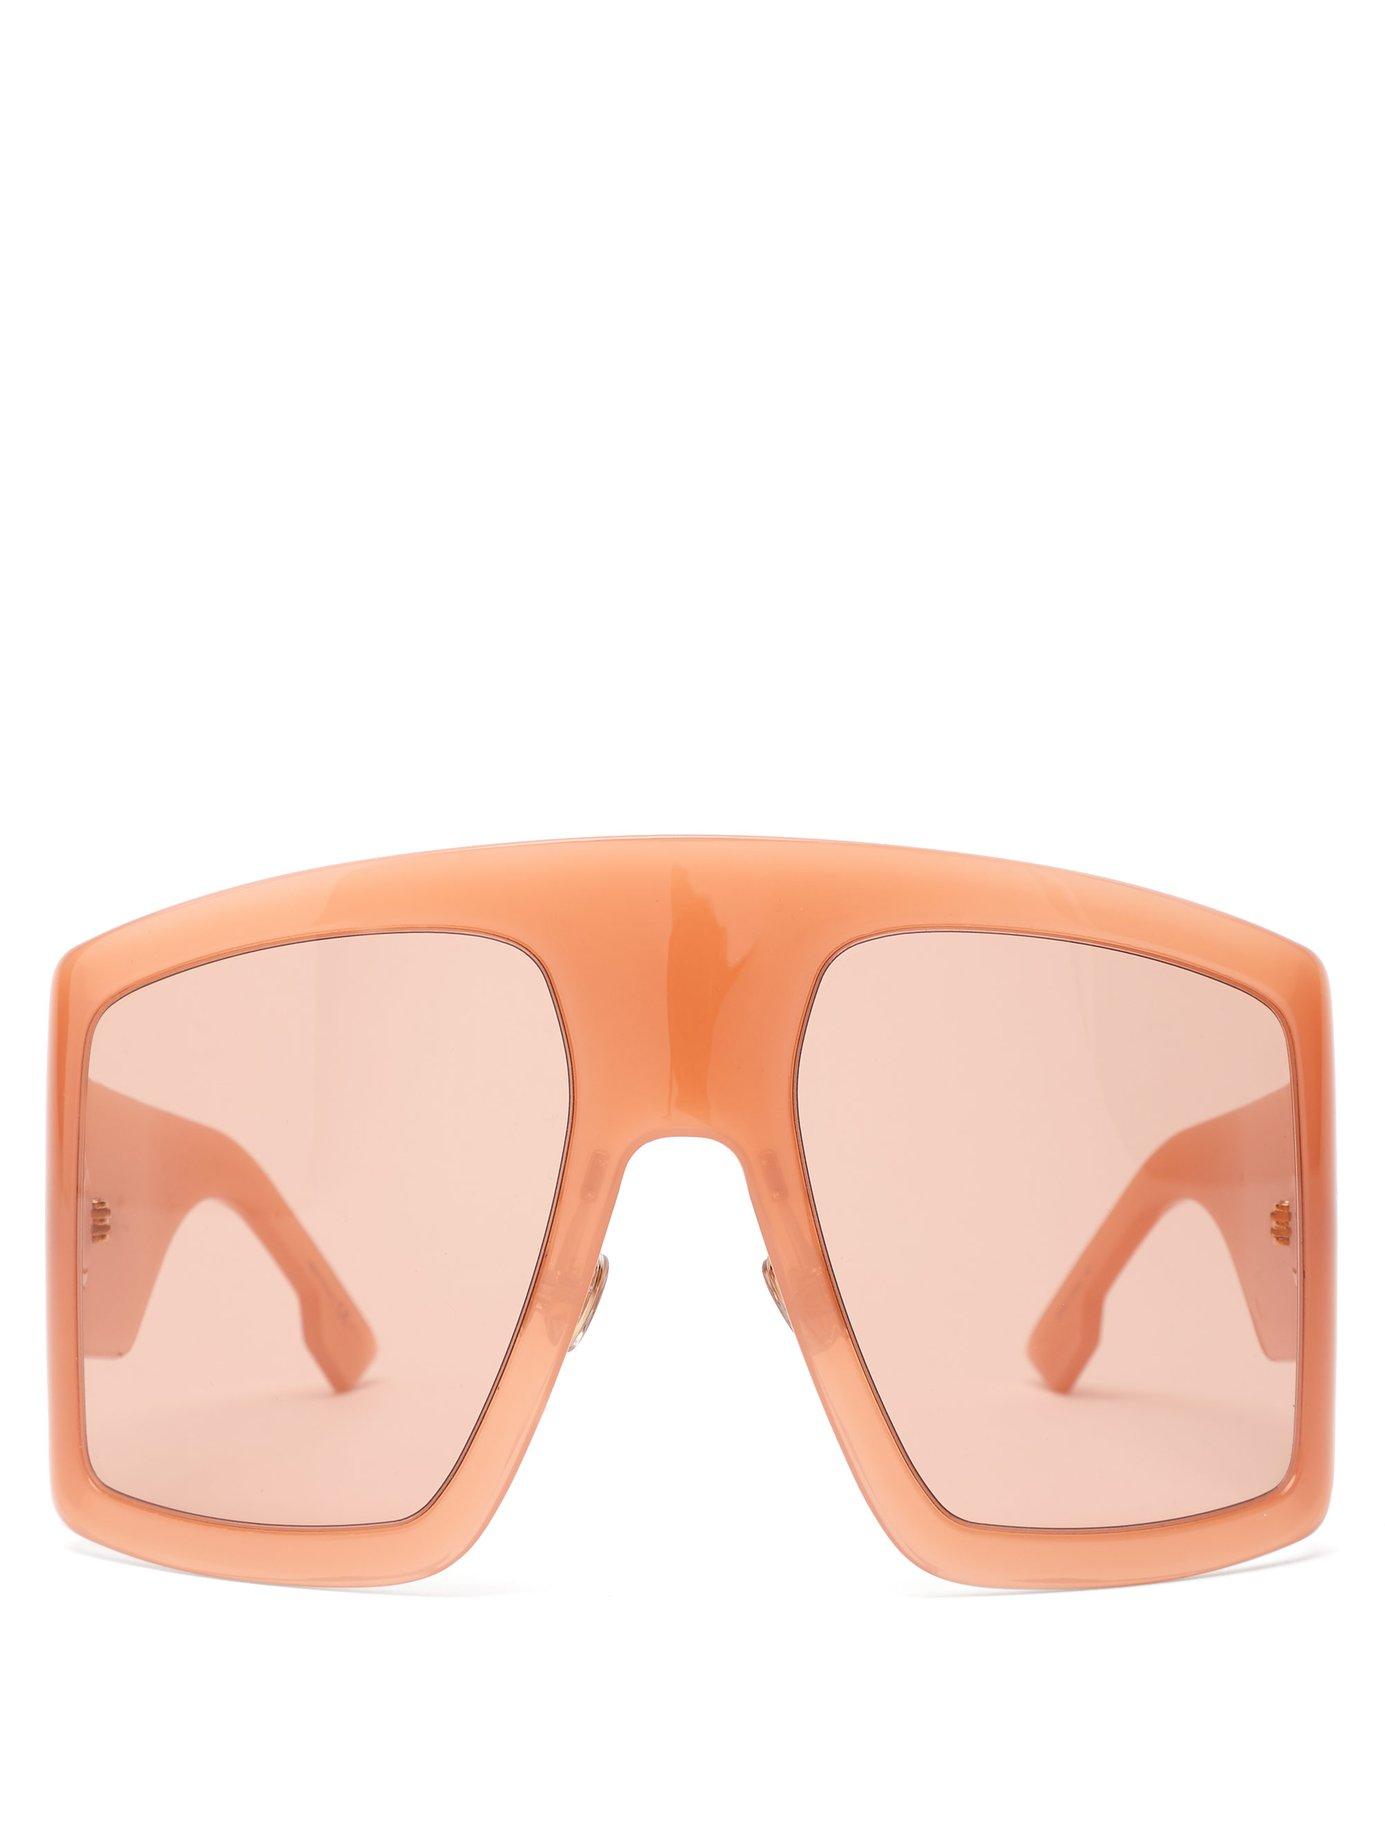 Dior Diorsolight1 Oversized Acetate Sunglasses in Pink - Lyst